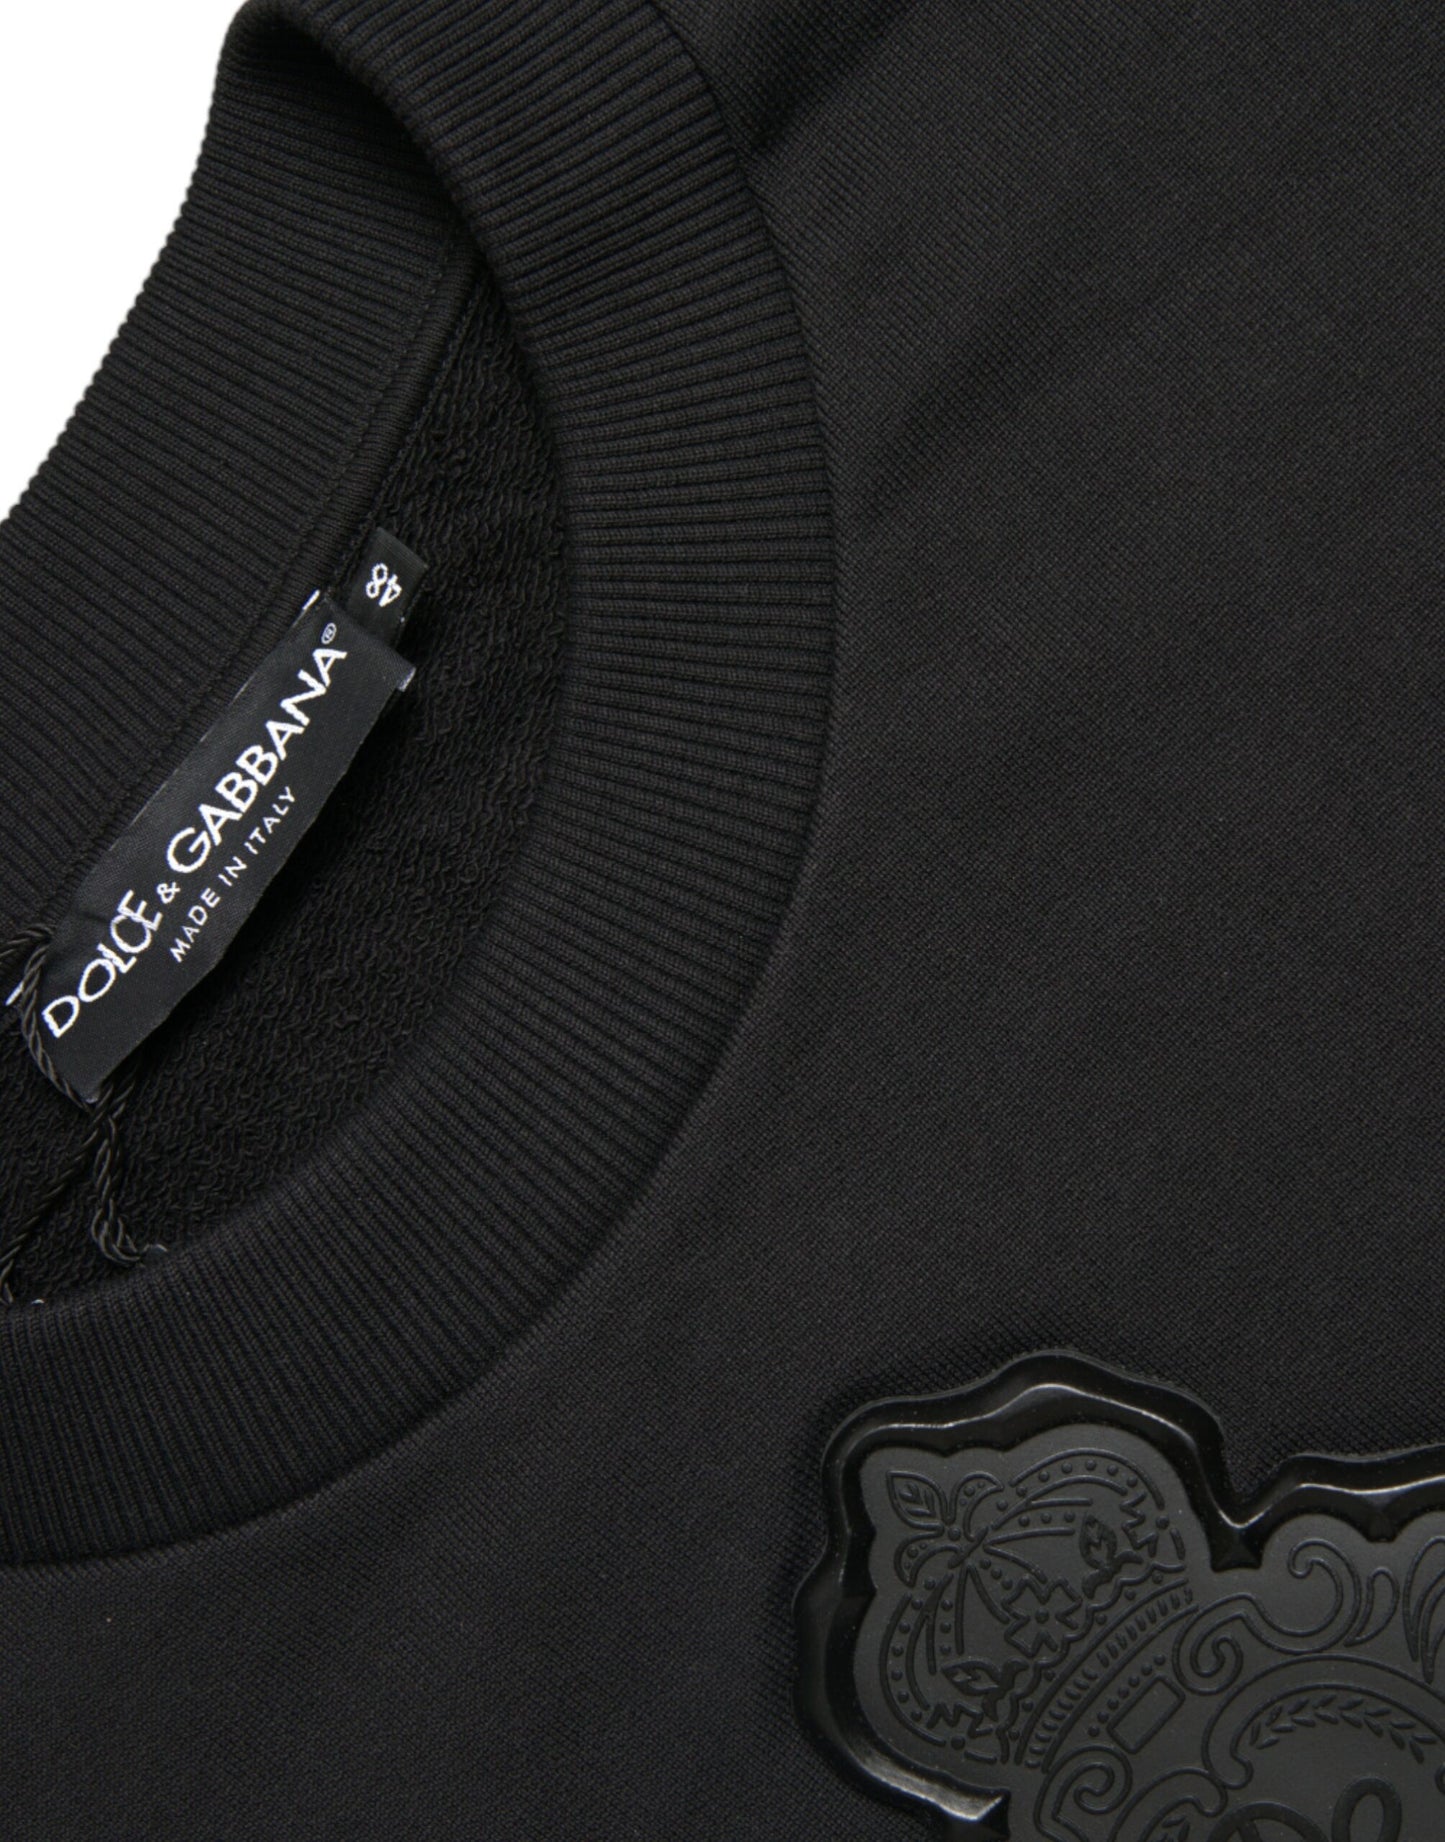 Dolce & Gabbana Elegant Black Cotton Pullover Sweater